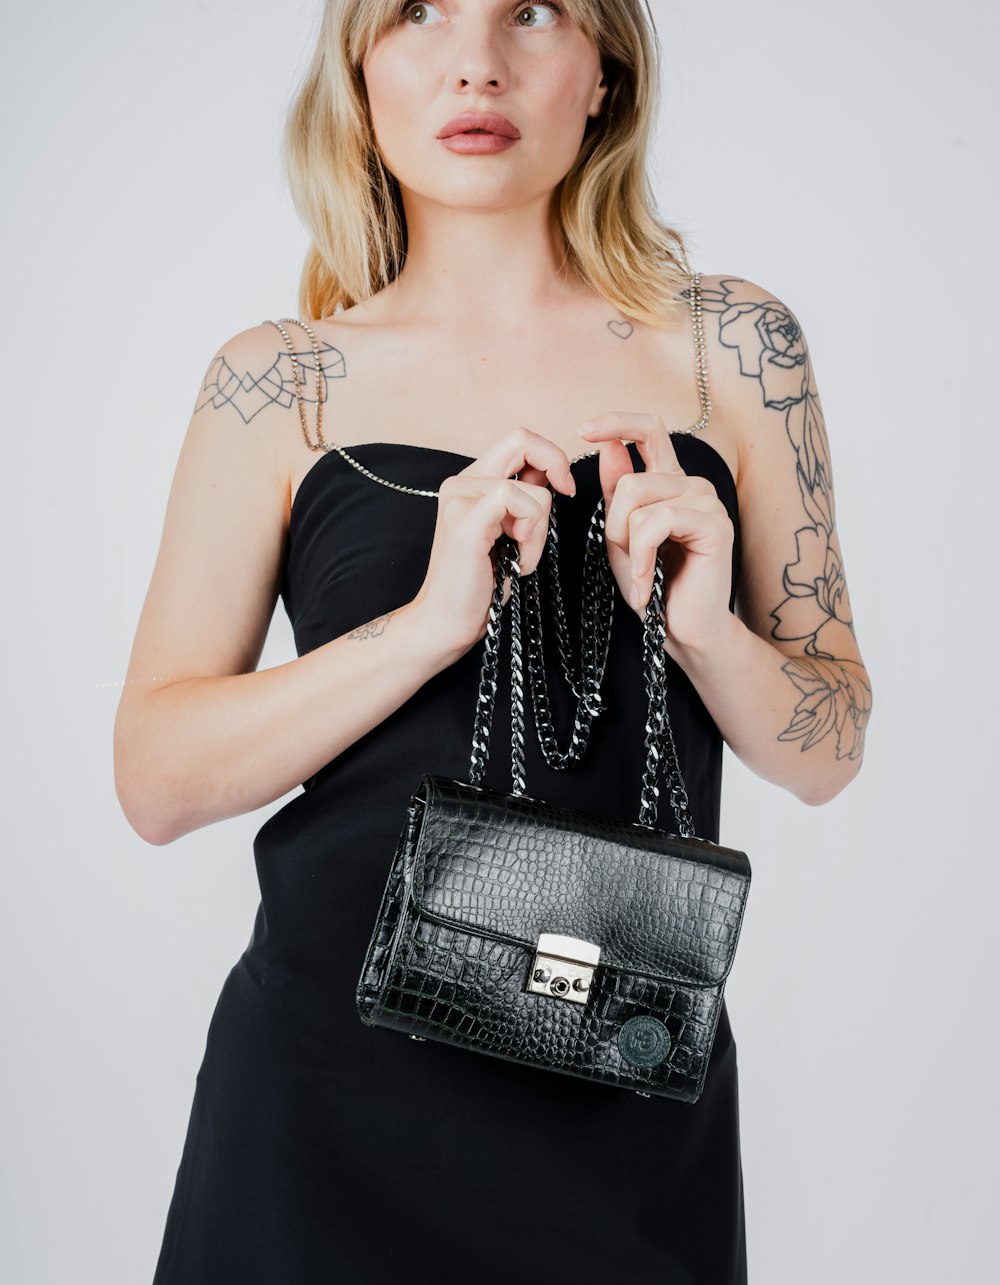 a woman in a black dress holding a black purse